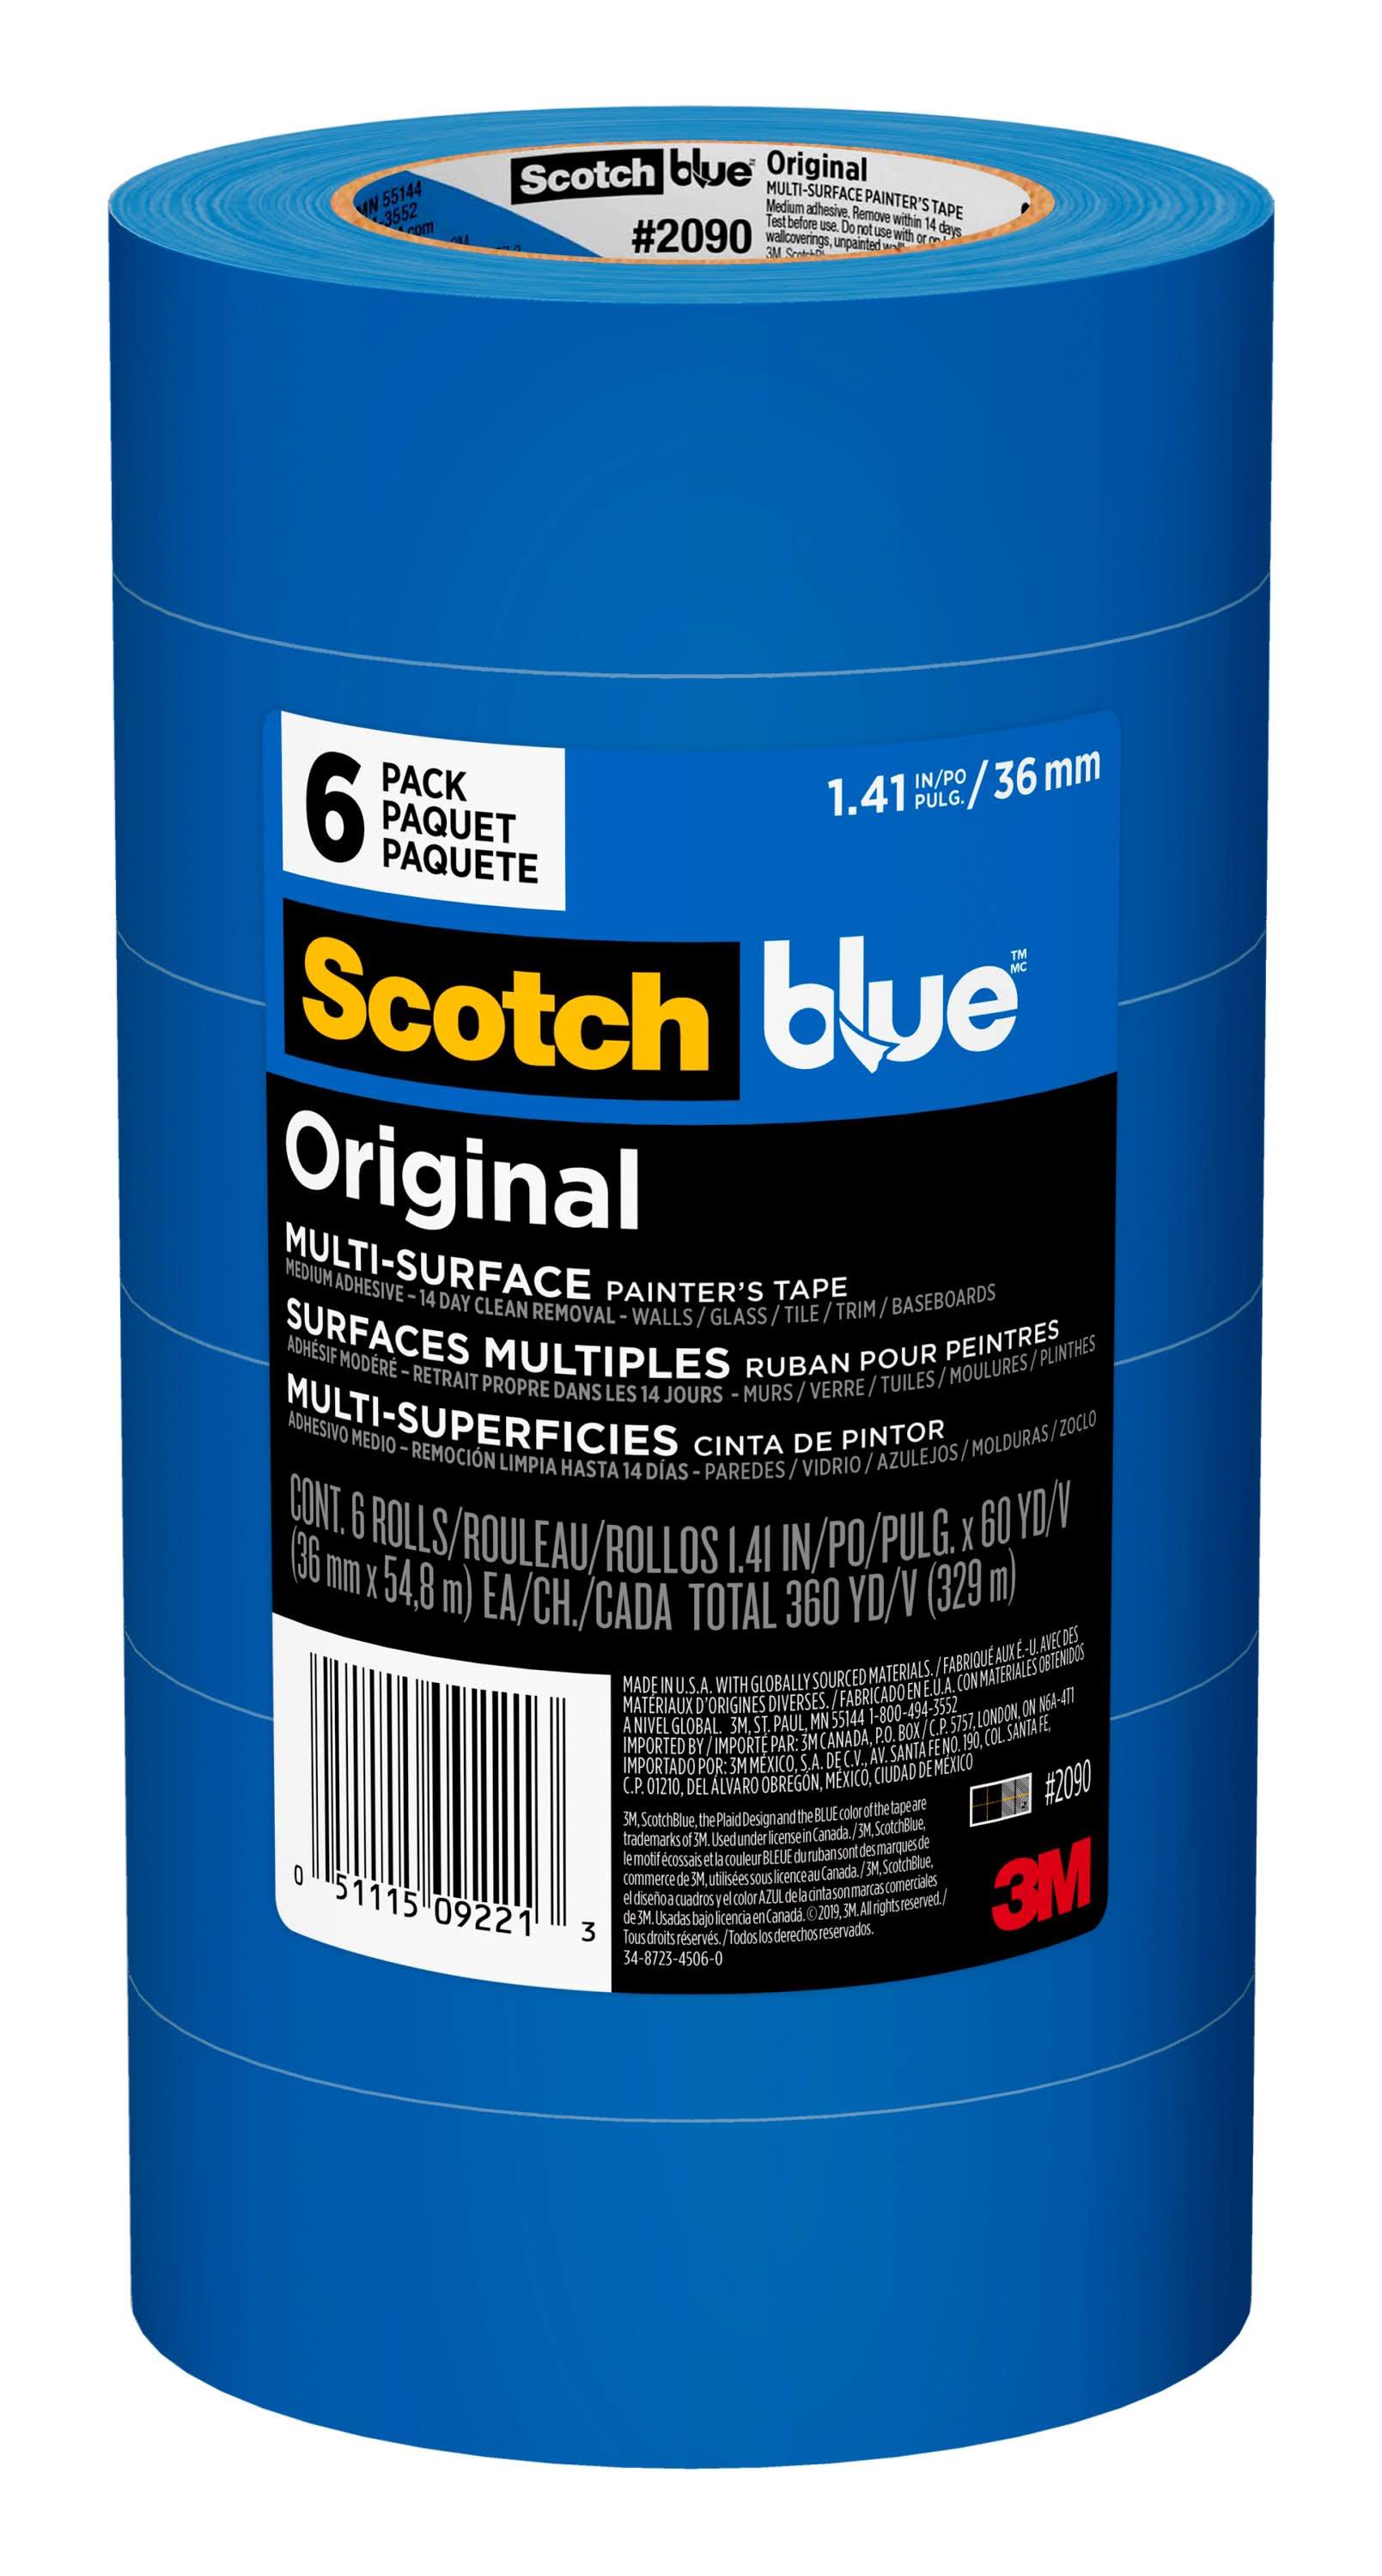 3M ScotchBlue Original Multi-Use Painter's Tape - 1.41 in x 60 yds